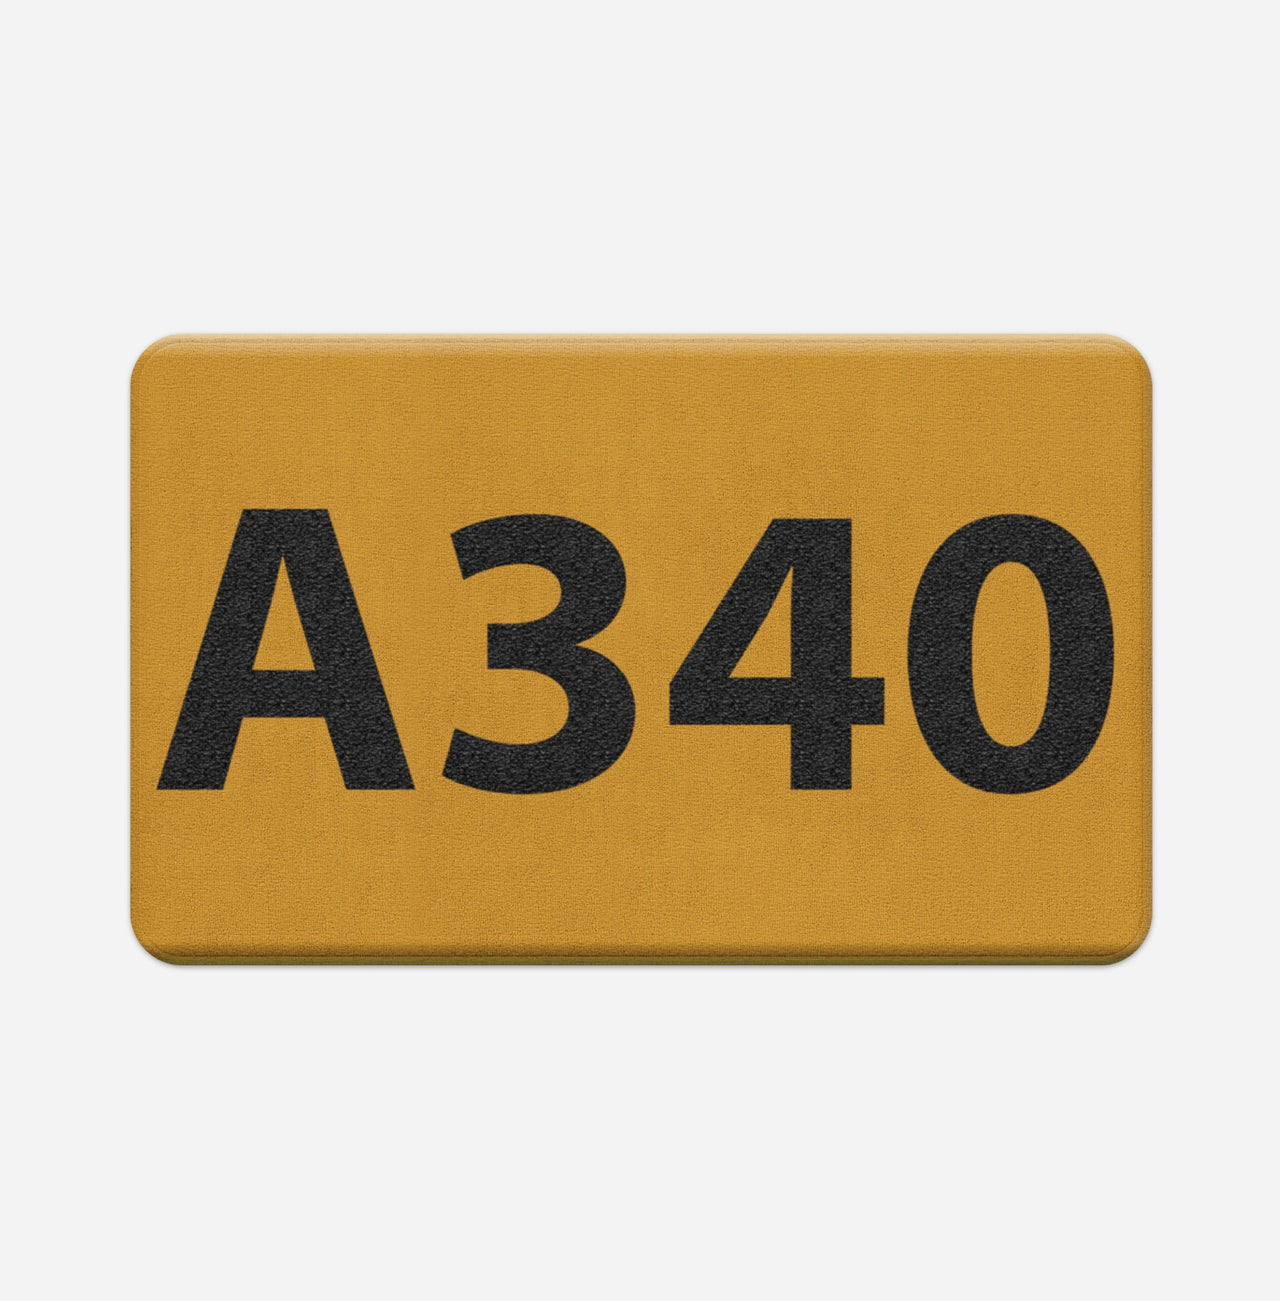 Airport Ground Signs Designed "Airbus A340" Bath Mats Pilot Eyes Store Floor Mat 50x80cm 